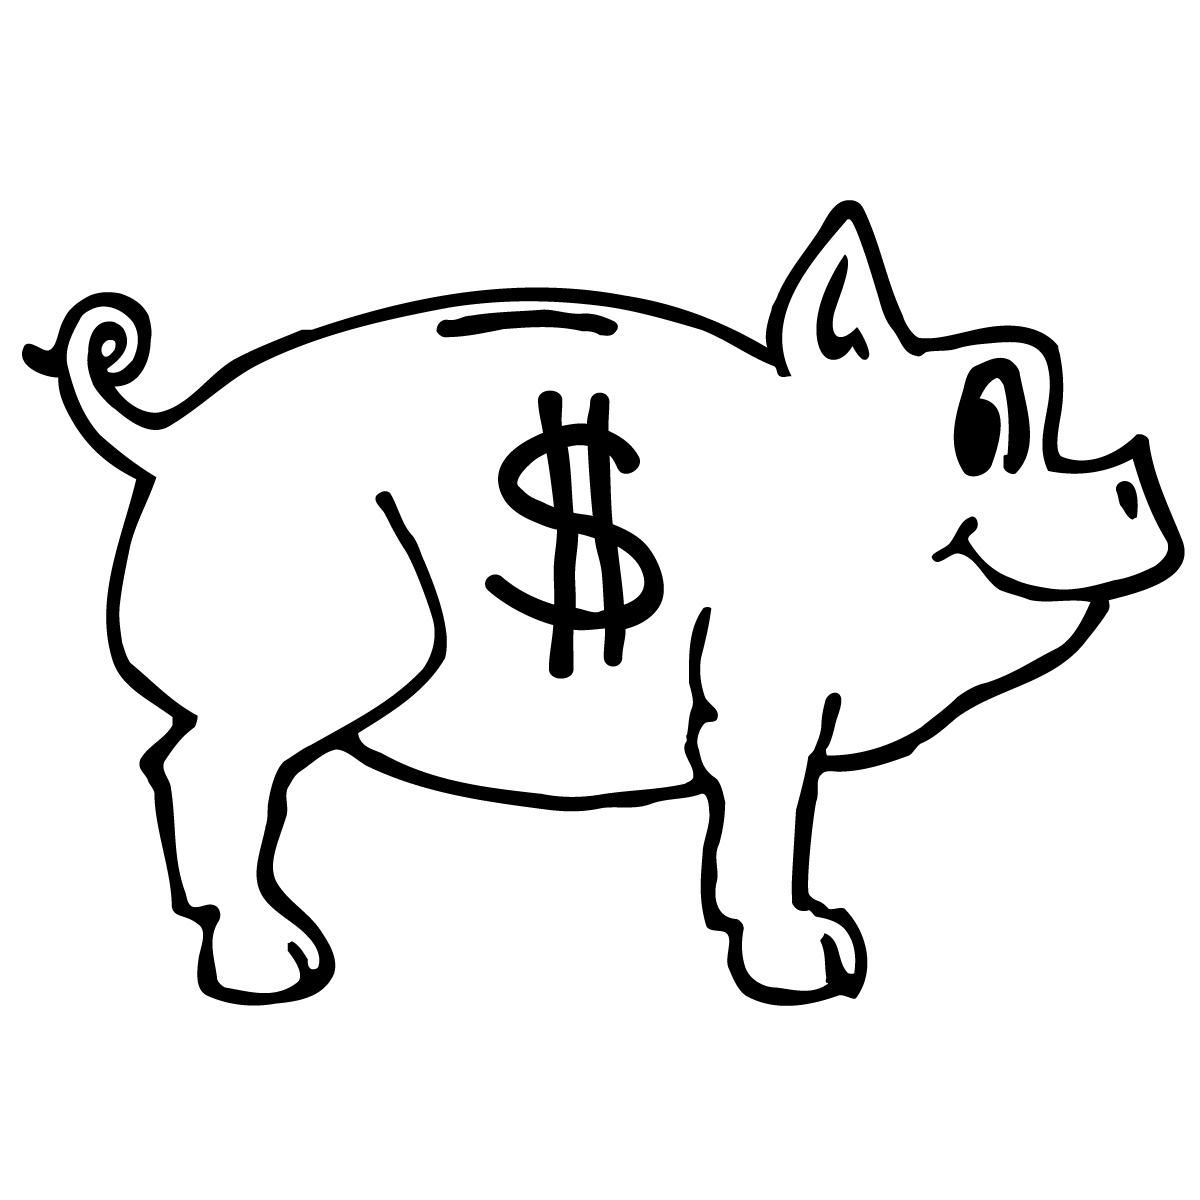 Piggy Bank Clip Art Black And White   Clipart Panda   Free Clipart